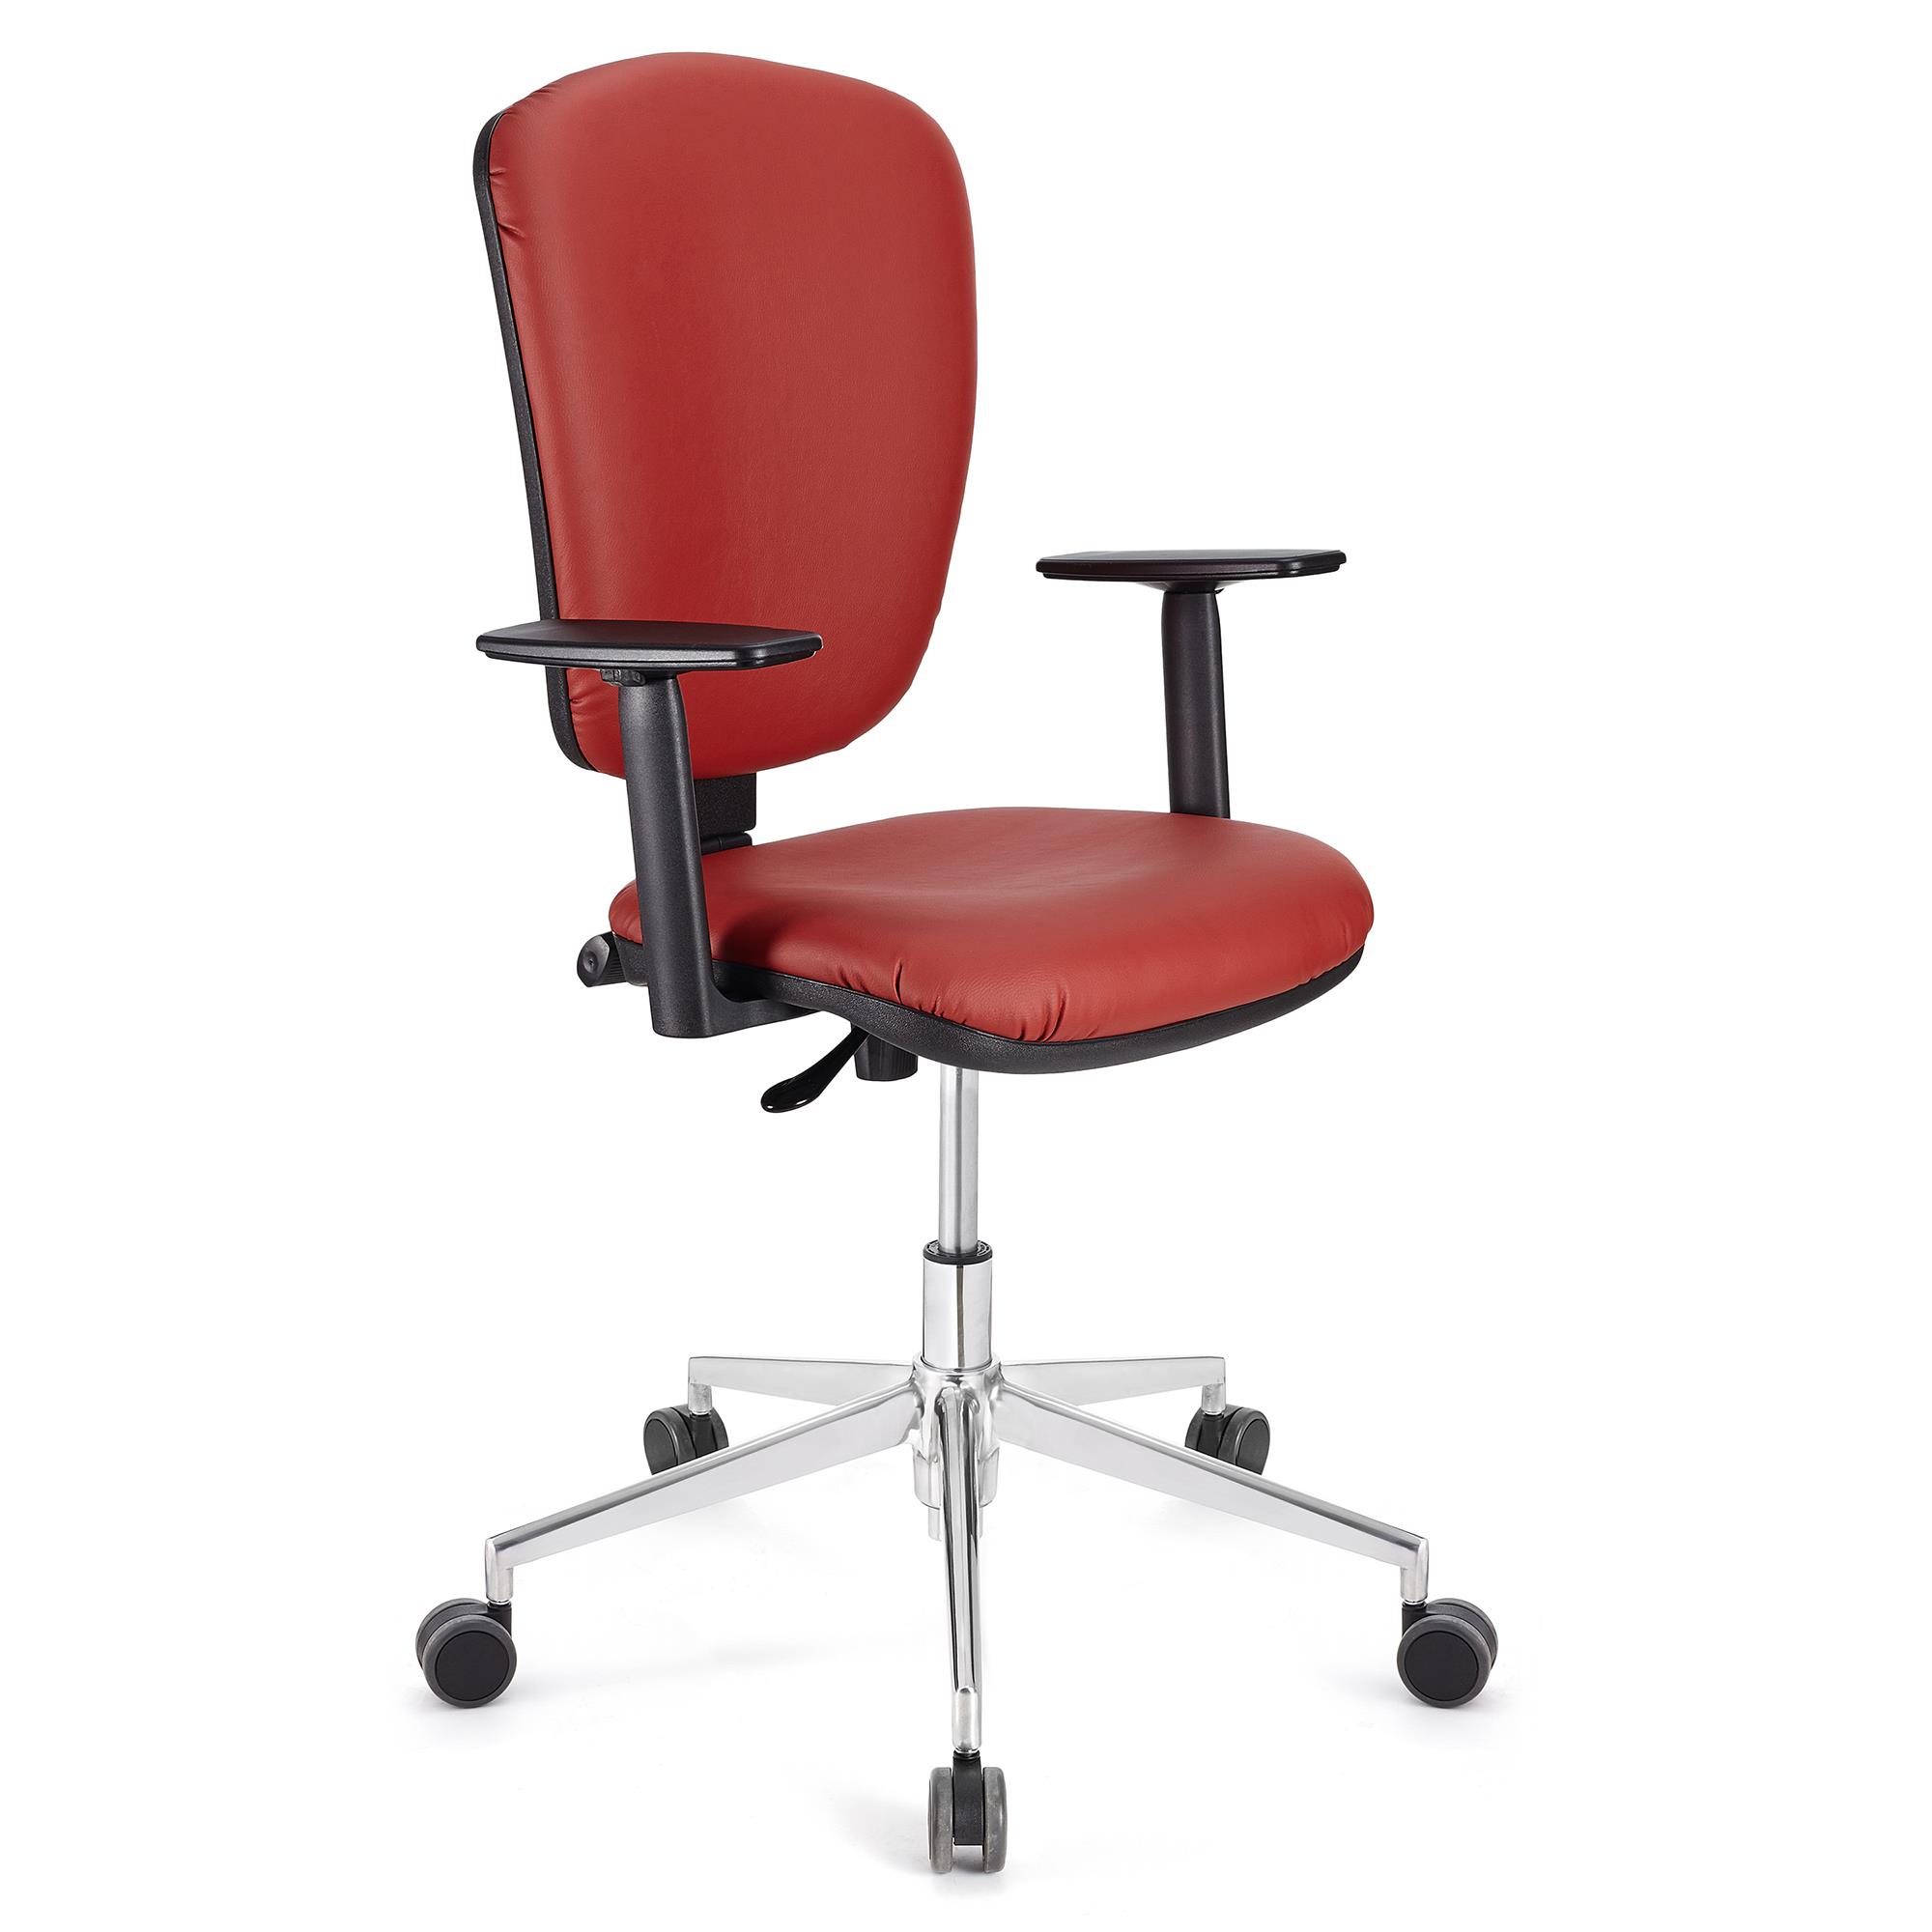 Bürostuhl KALIPSO PRO LEDER, verstellbare Rücken- und Armlehnen, Metallgestell, Lederbezug, Farbe Rot